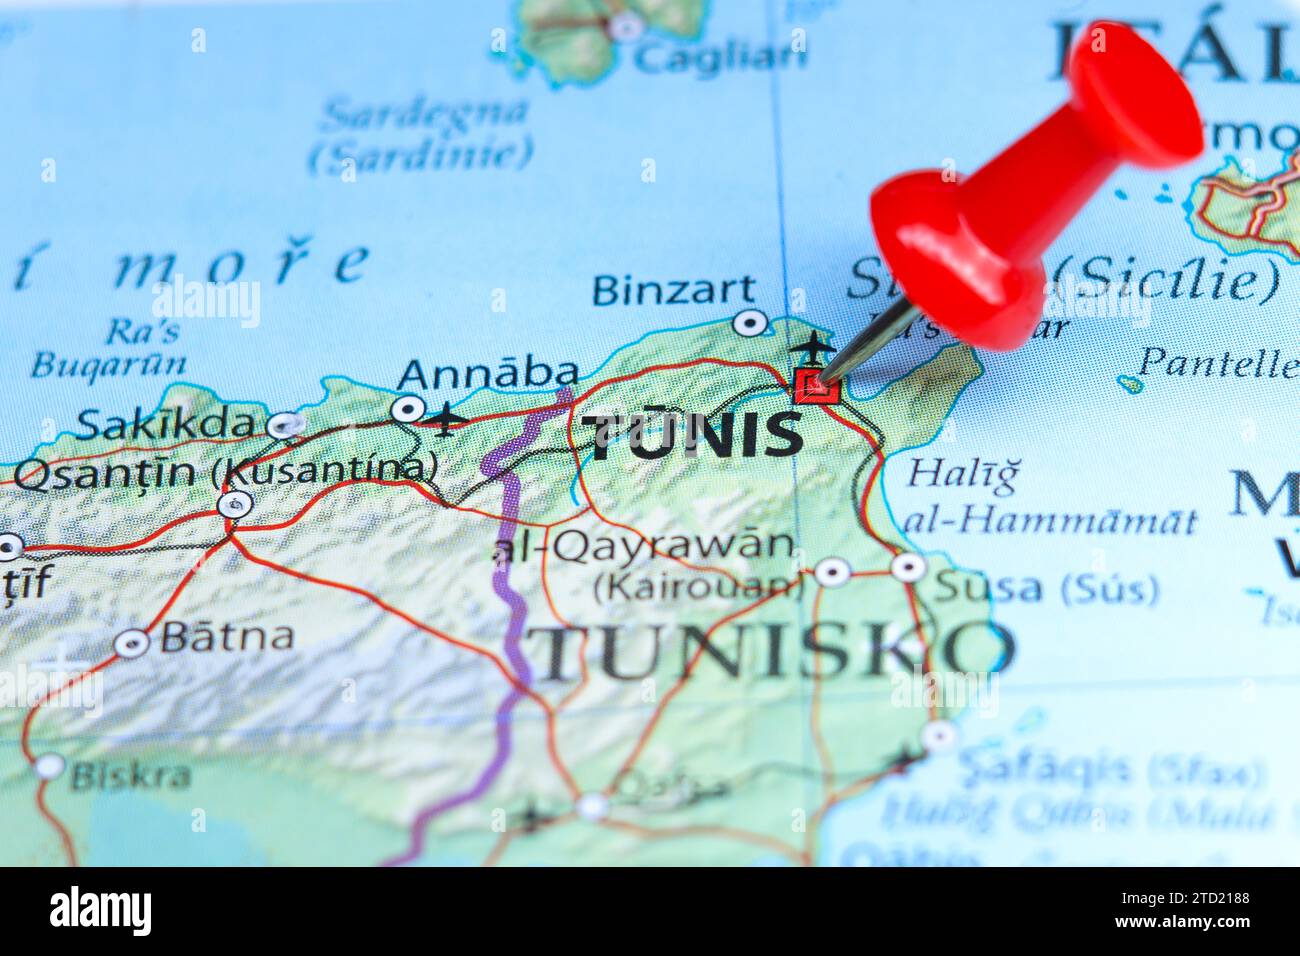 Tunis, Tunisia pin on map Stock Photo